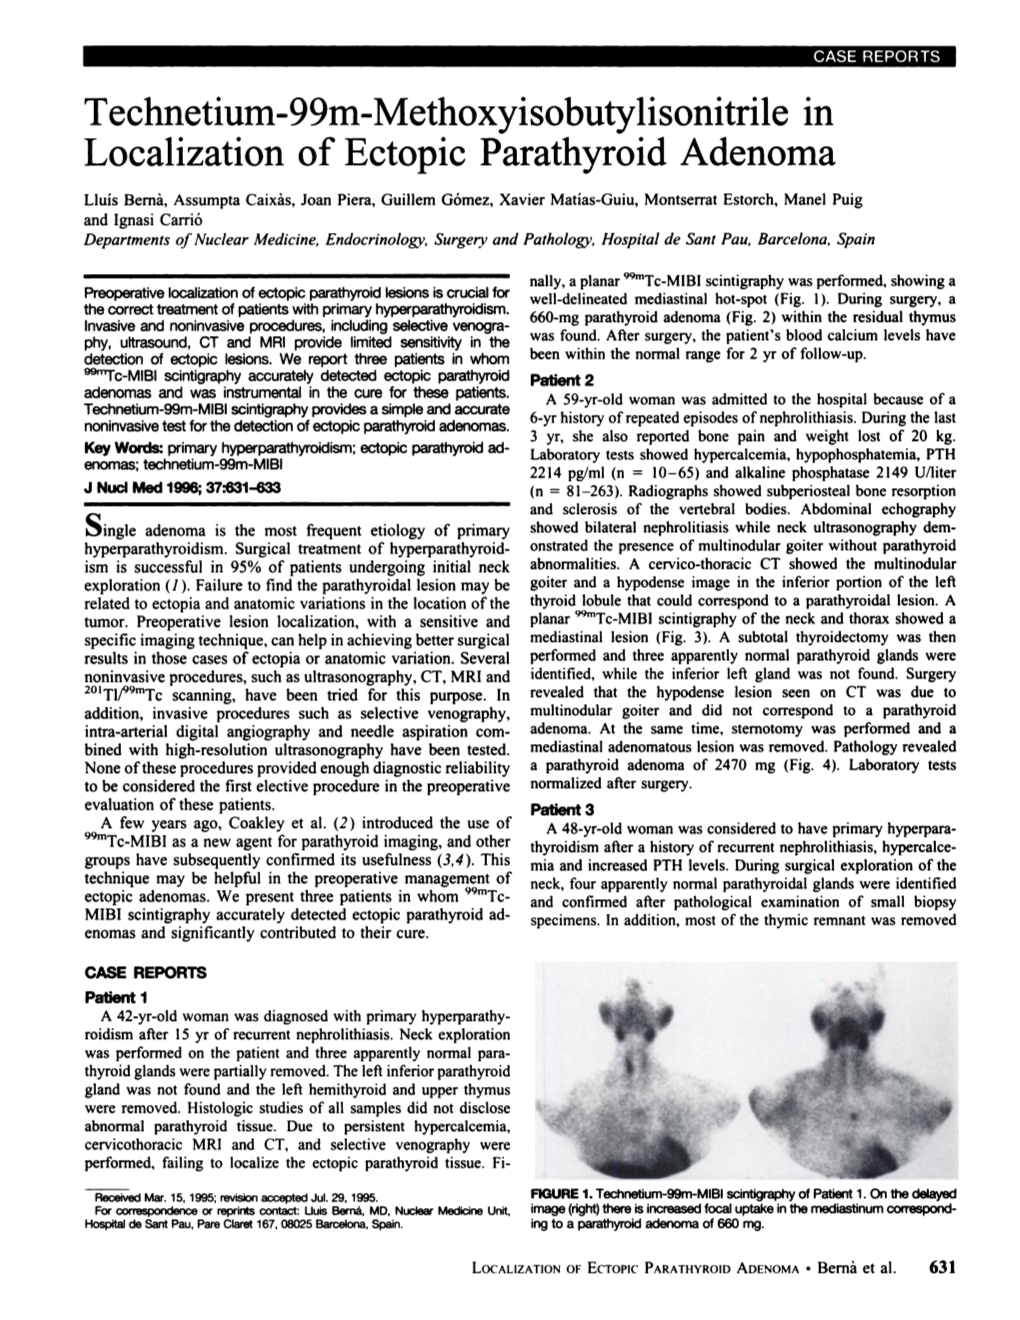 99M-Methoxyi Sobutylisonitrile in Localization of Ectopic Parathyroid